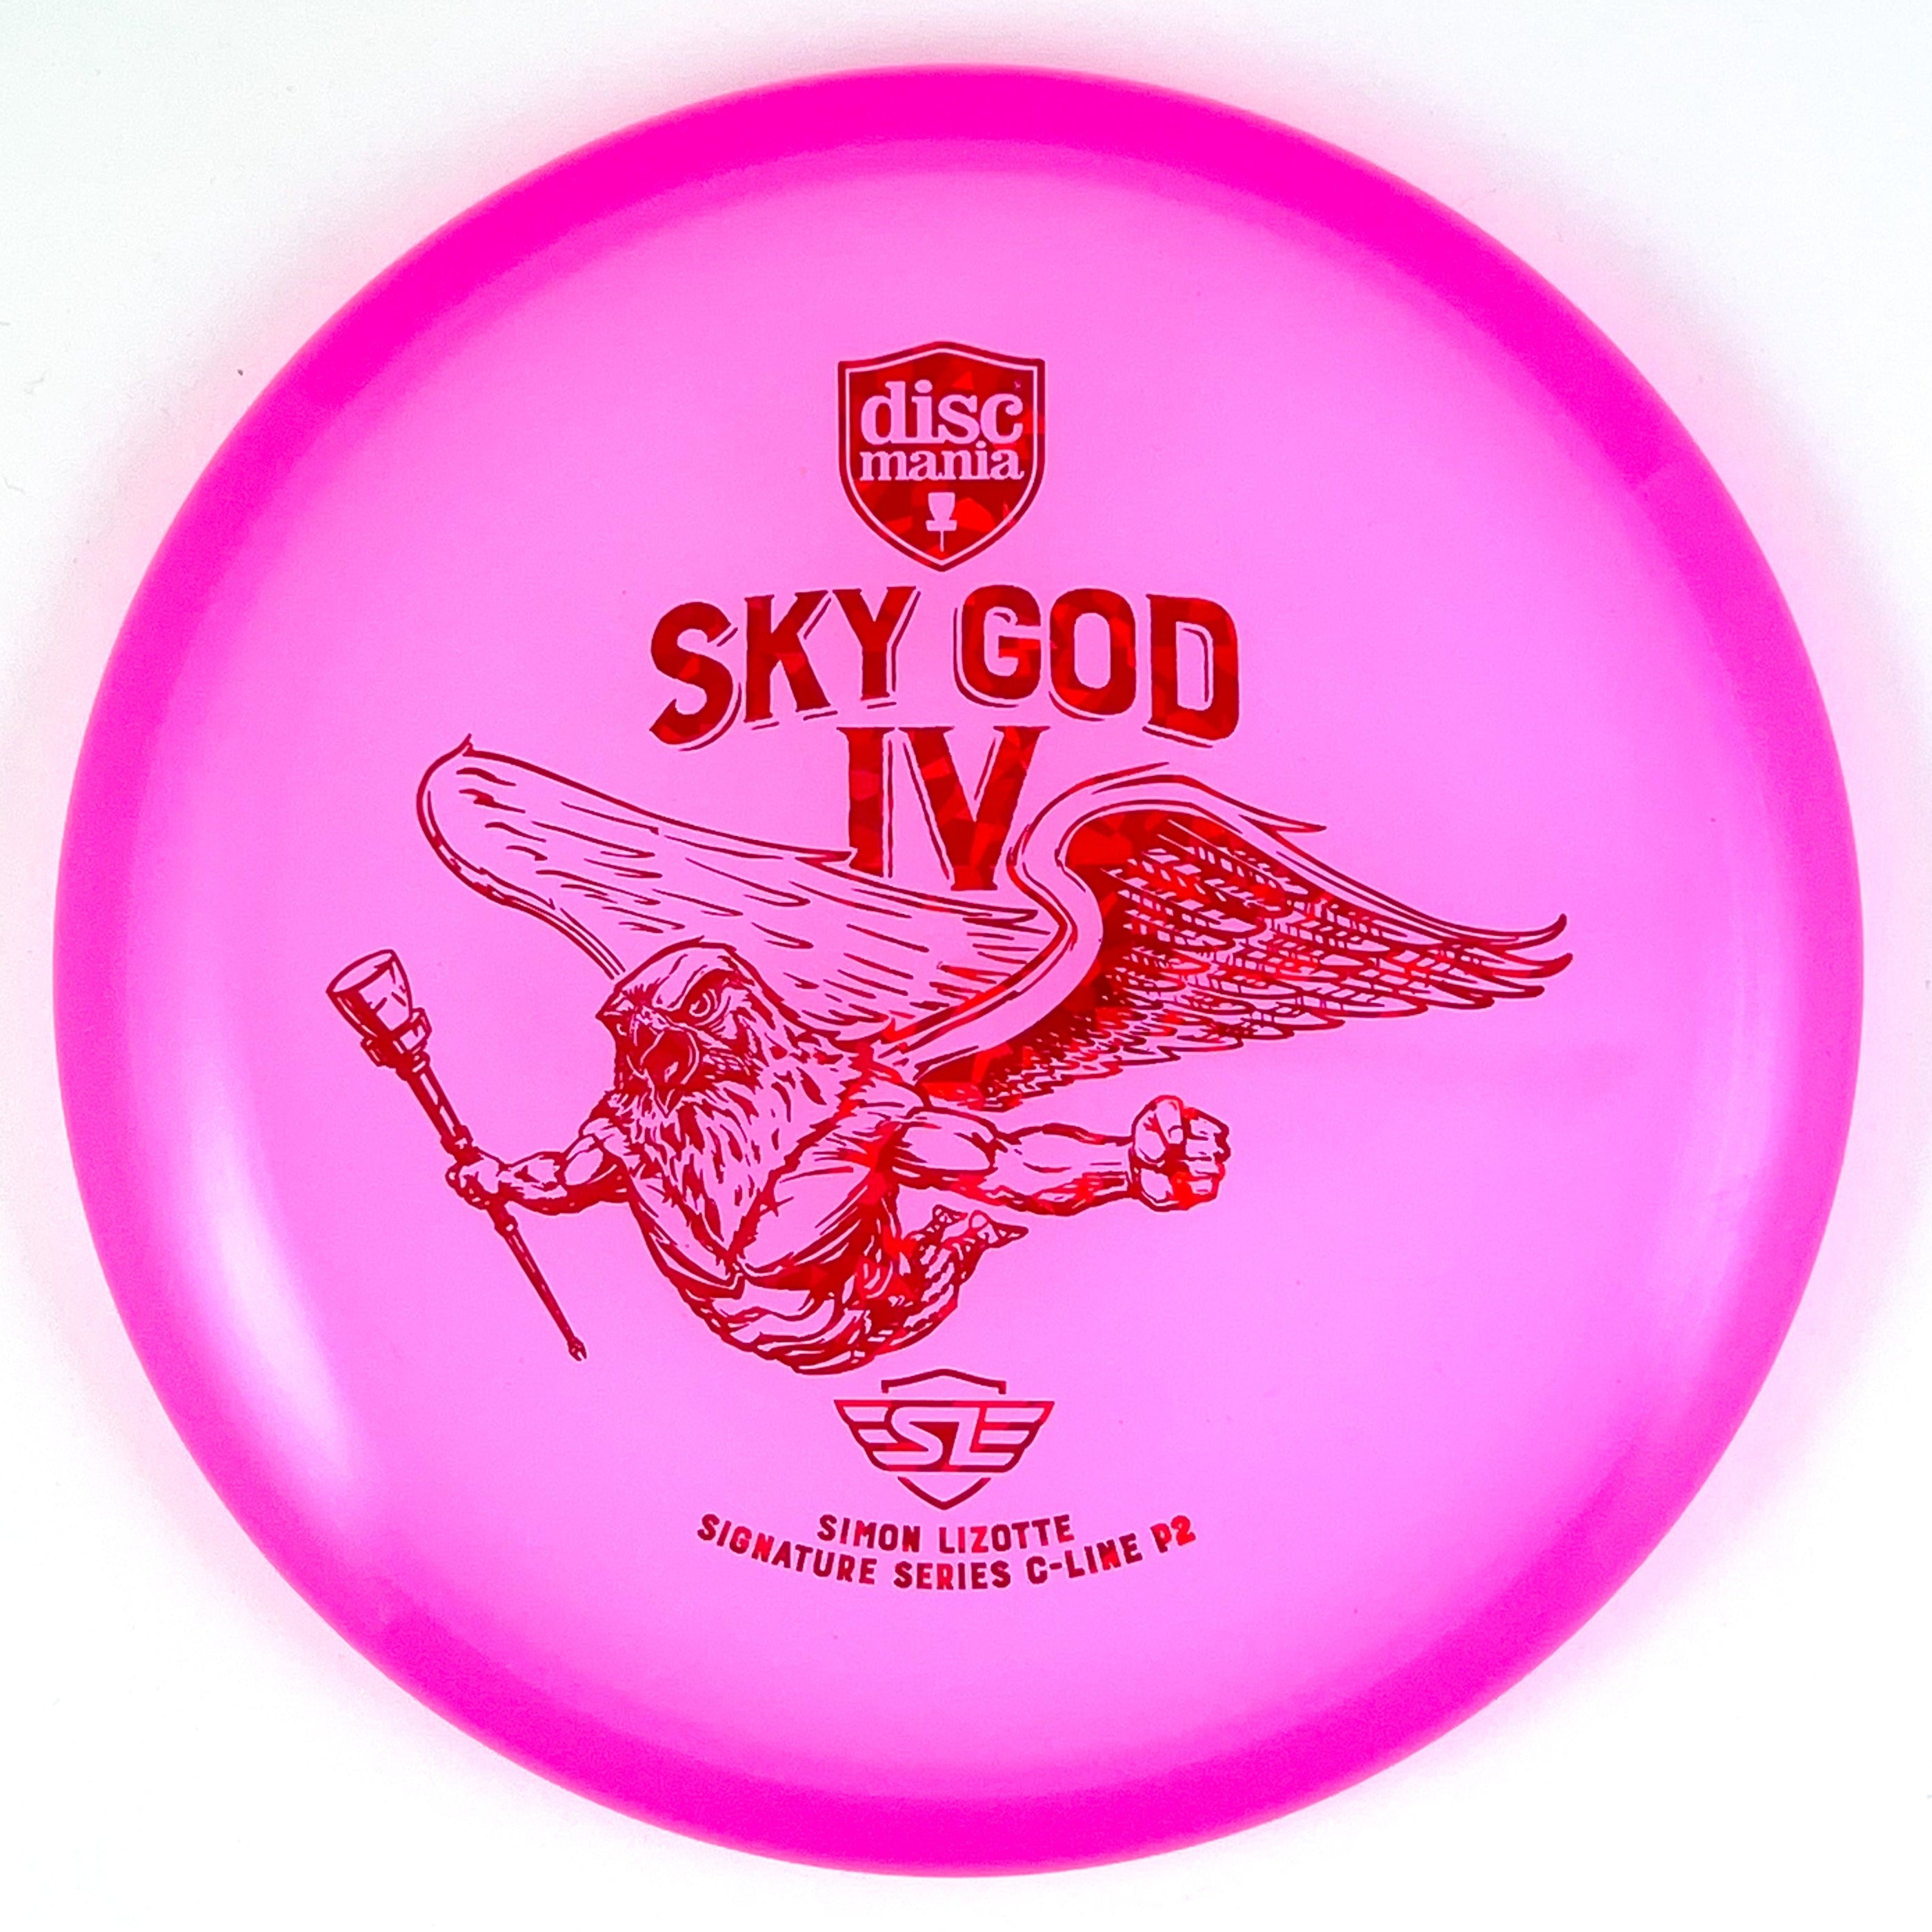 Pink Simon Lizotte Signature Series Sky God 4, C-Line P2 disc golf putter disc by Discmania.